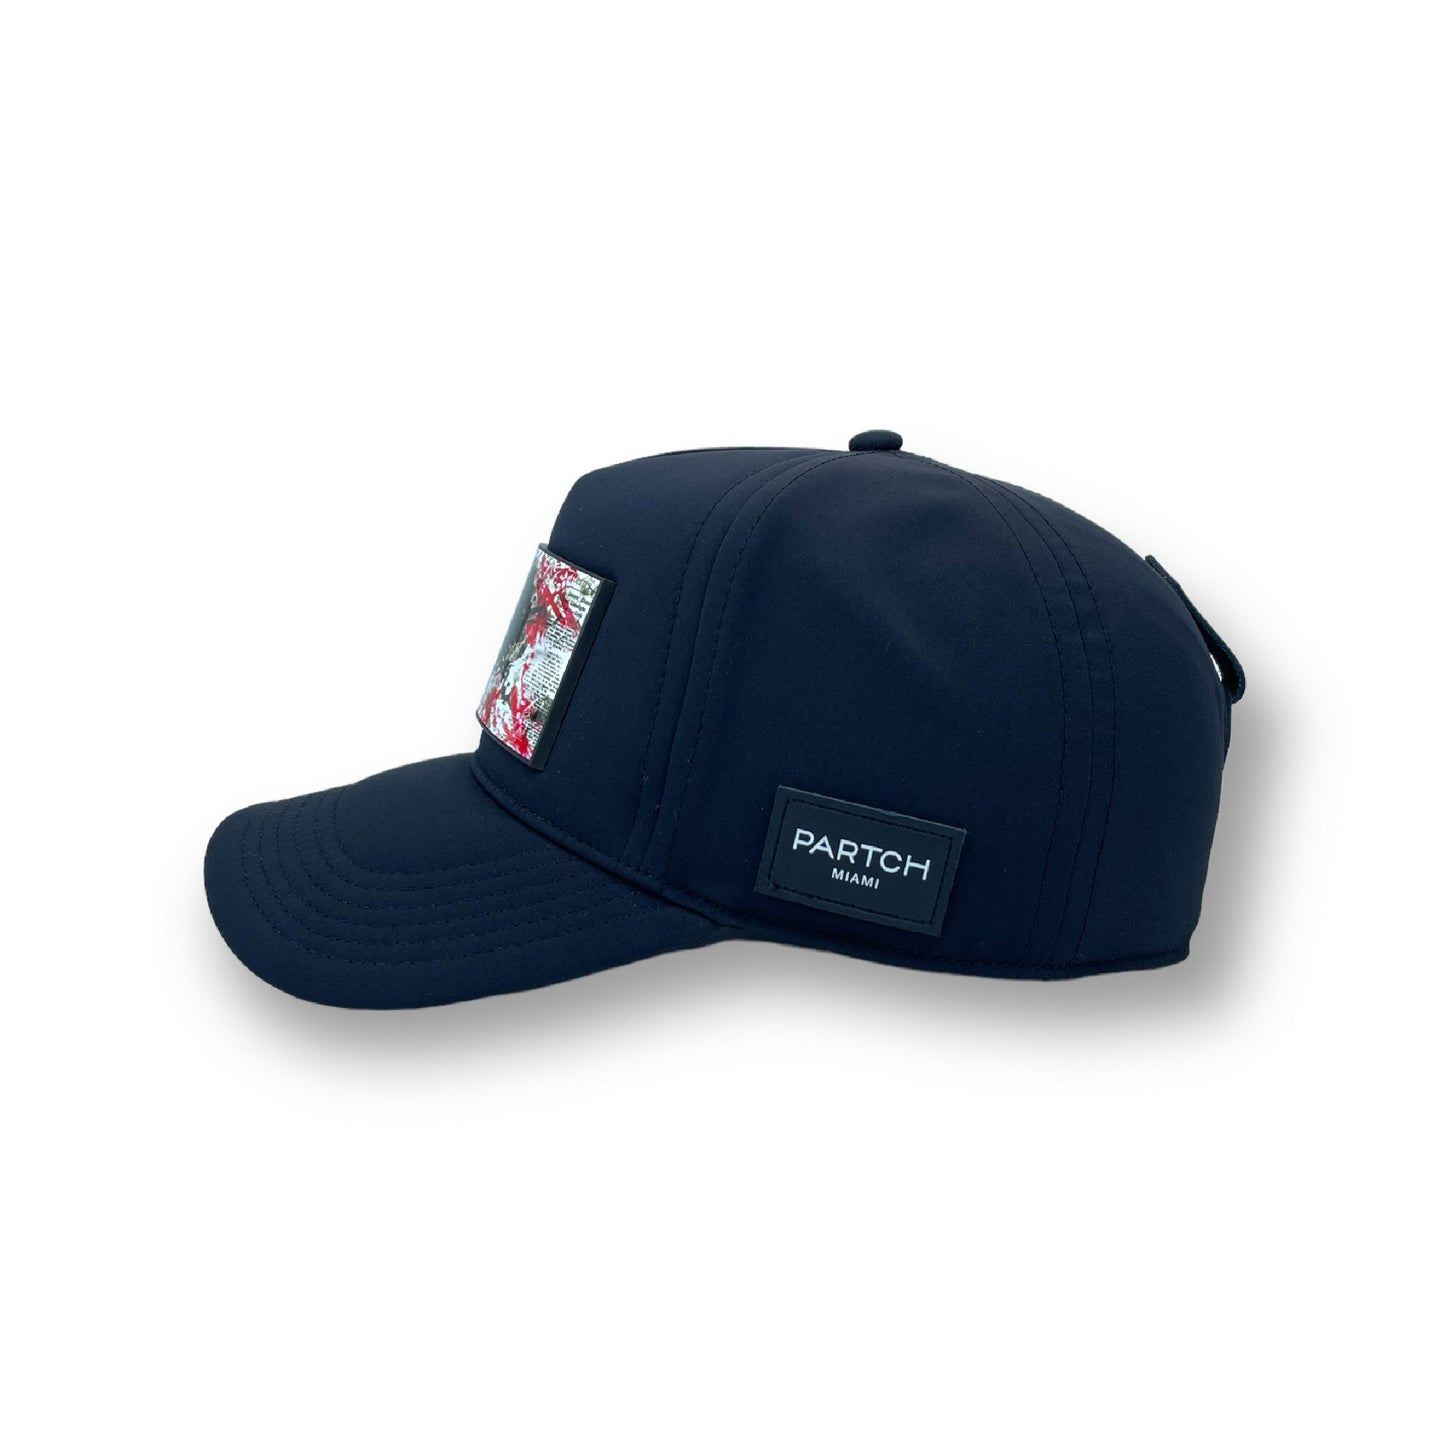 Heart Art Front Patch Removable Partch Clip | Luxury Designer Trucker Hat in Black | PARTCH